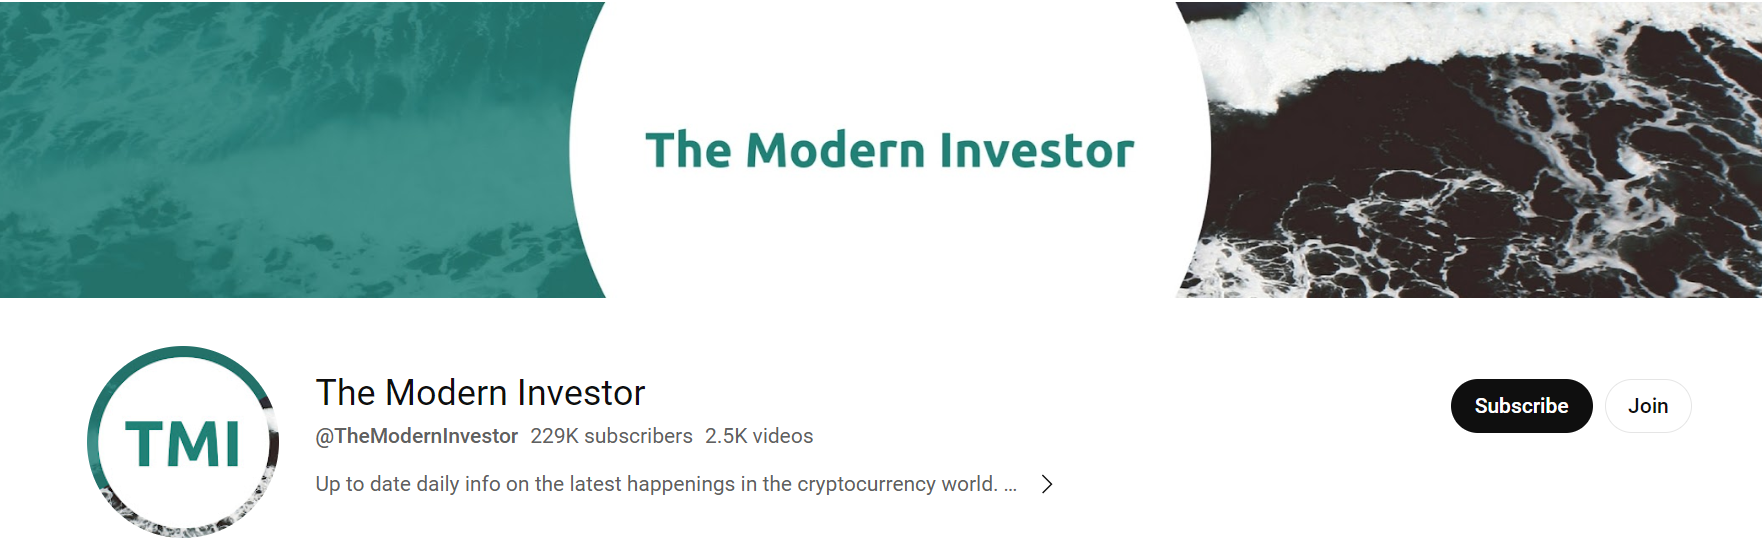 The Modern Investor